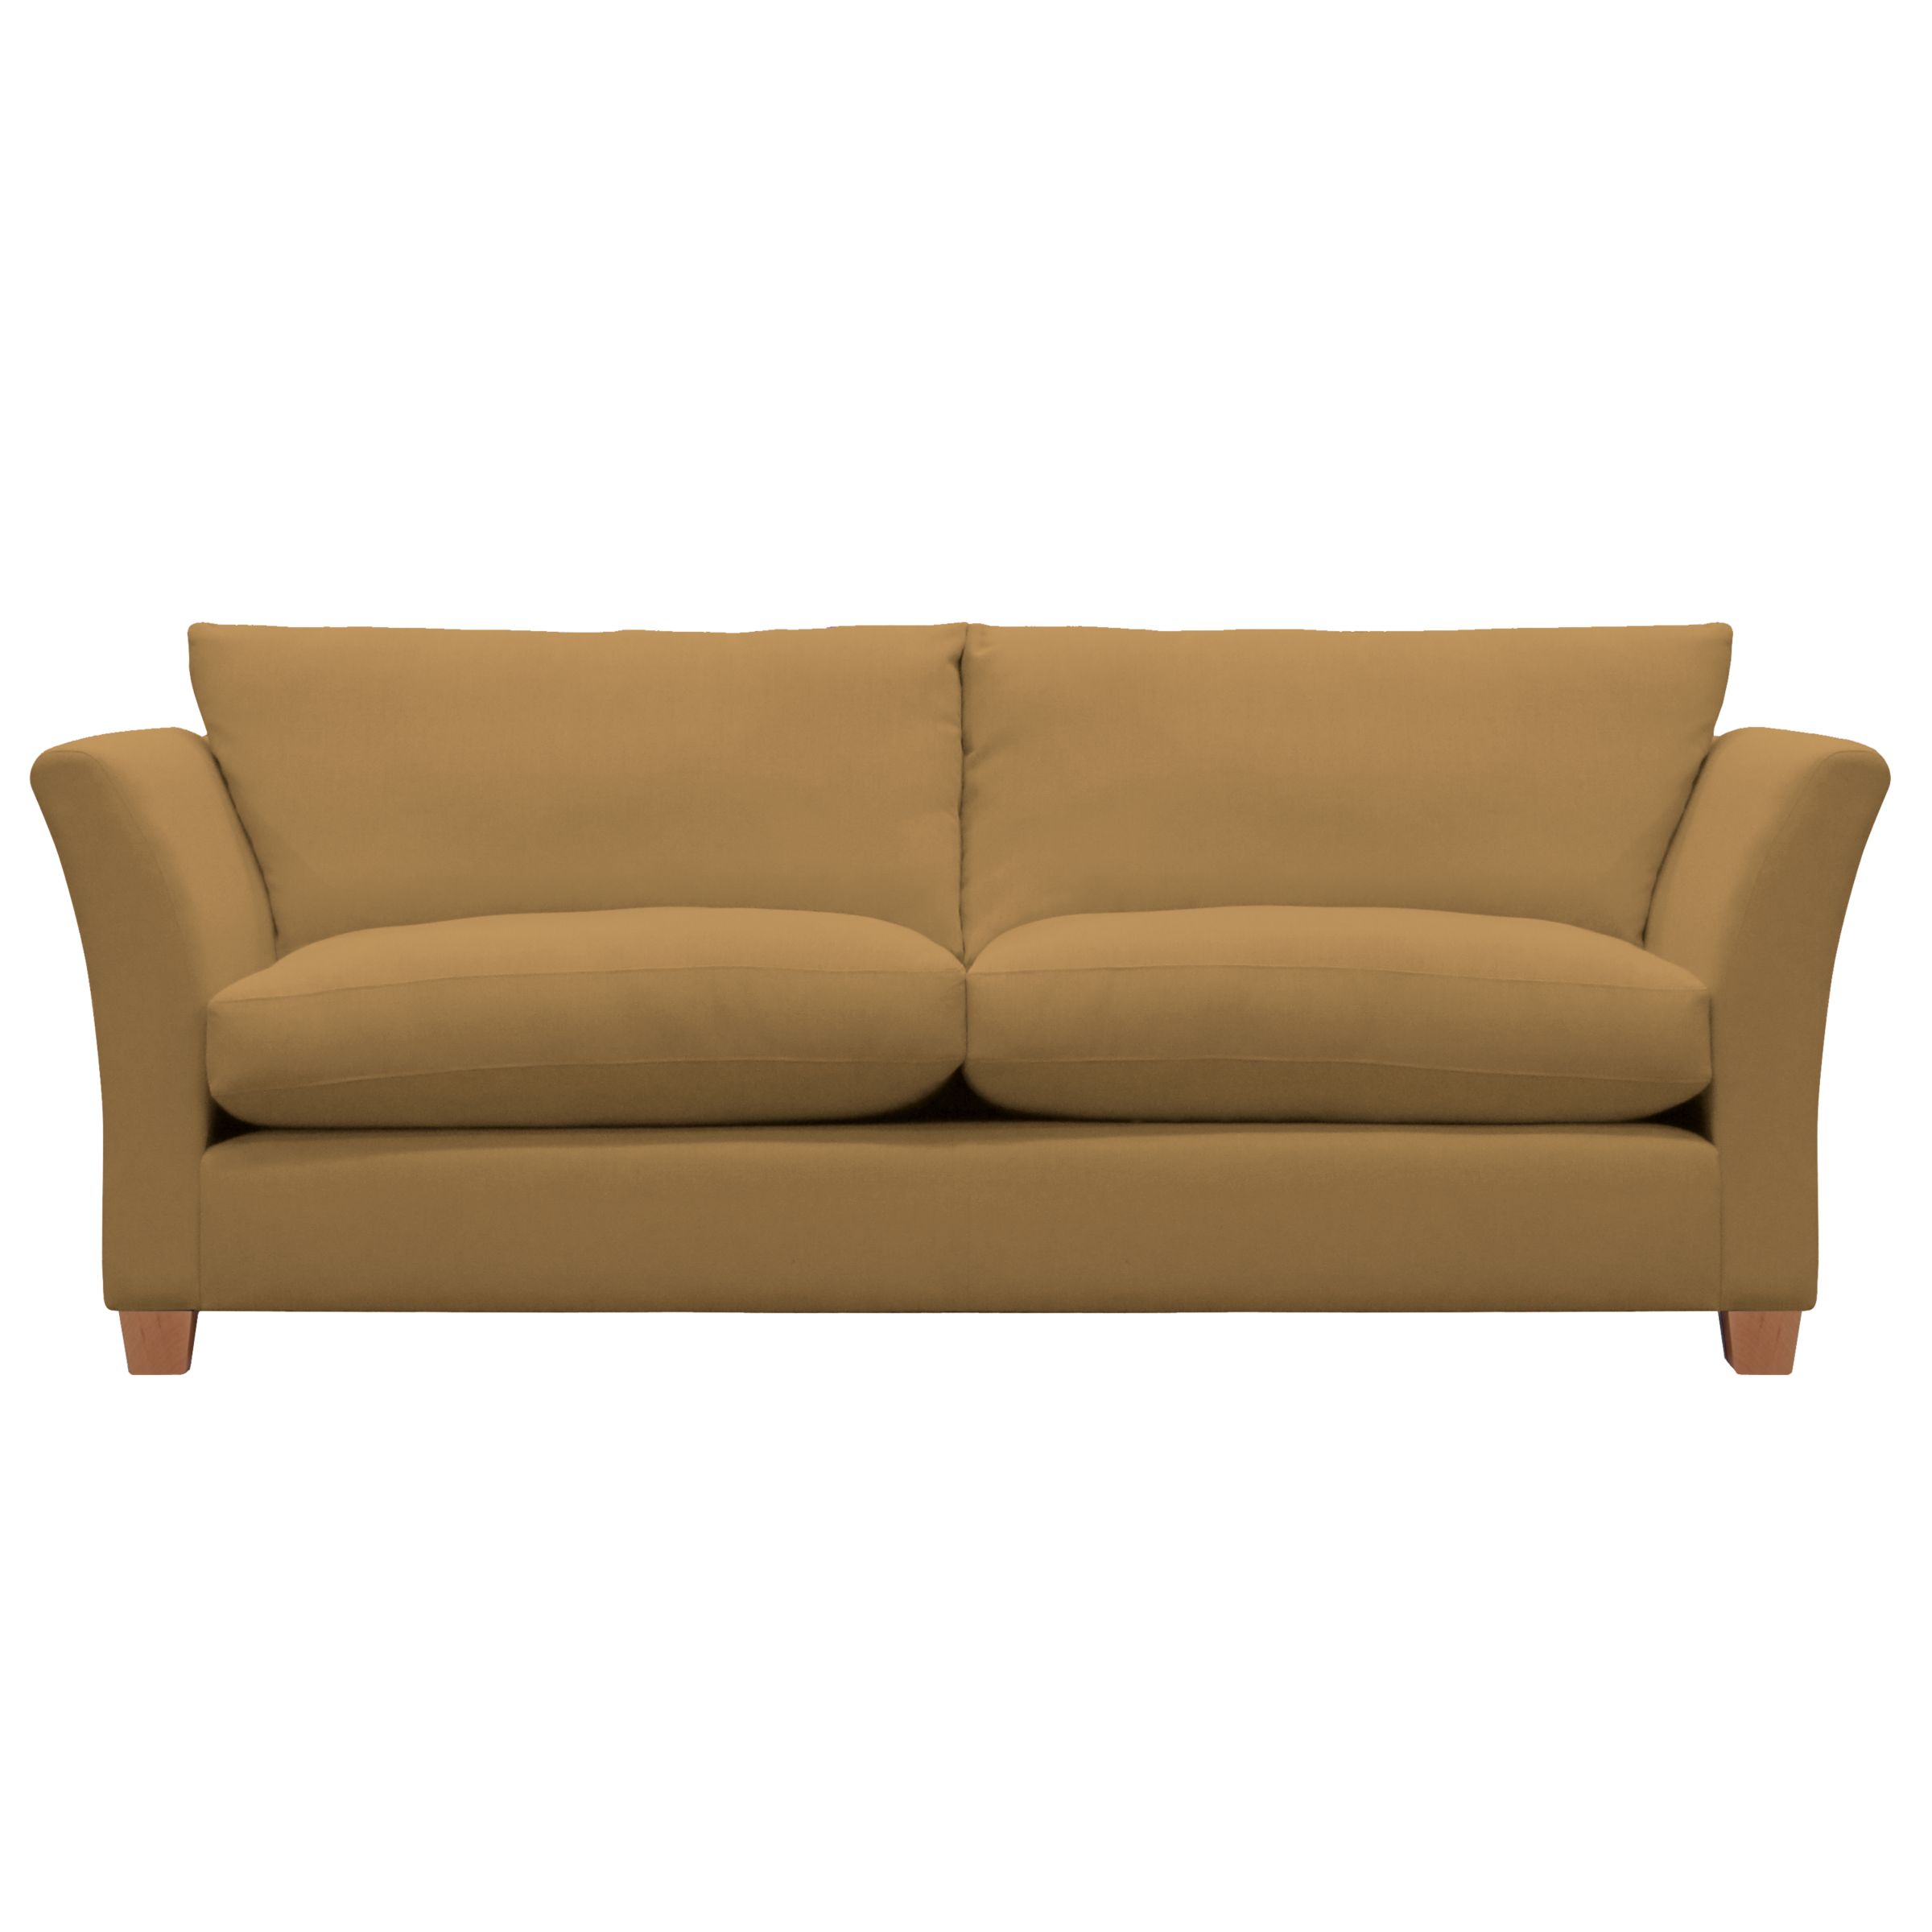 John Lewis Options Flare Arm Grand Sofa, Linley Caf, width 225cm